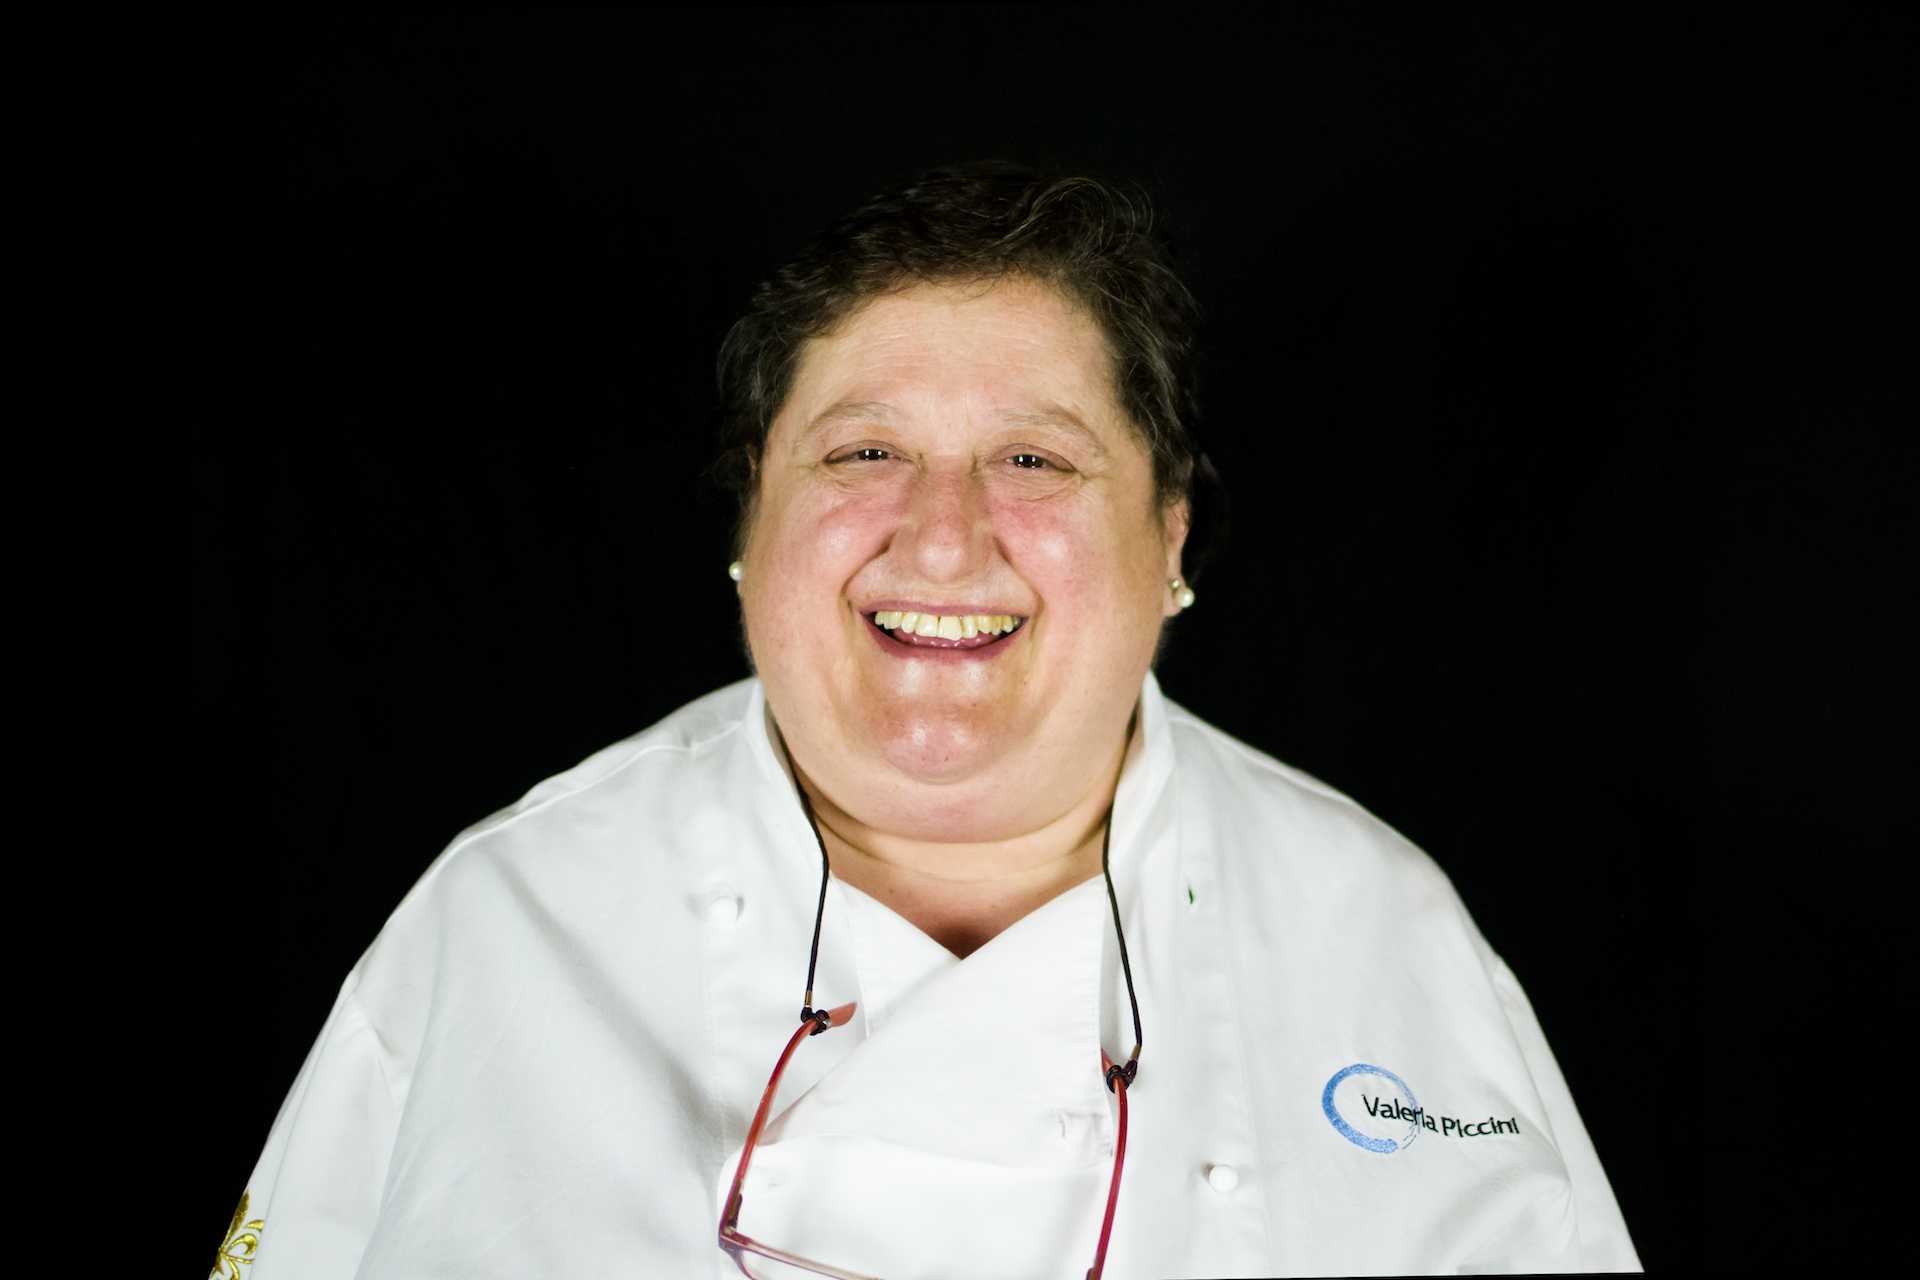 Chef Valeria Piccini **